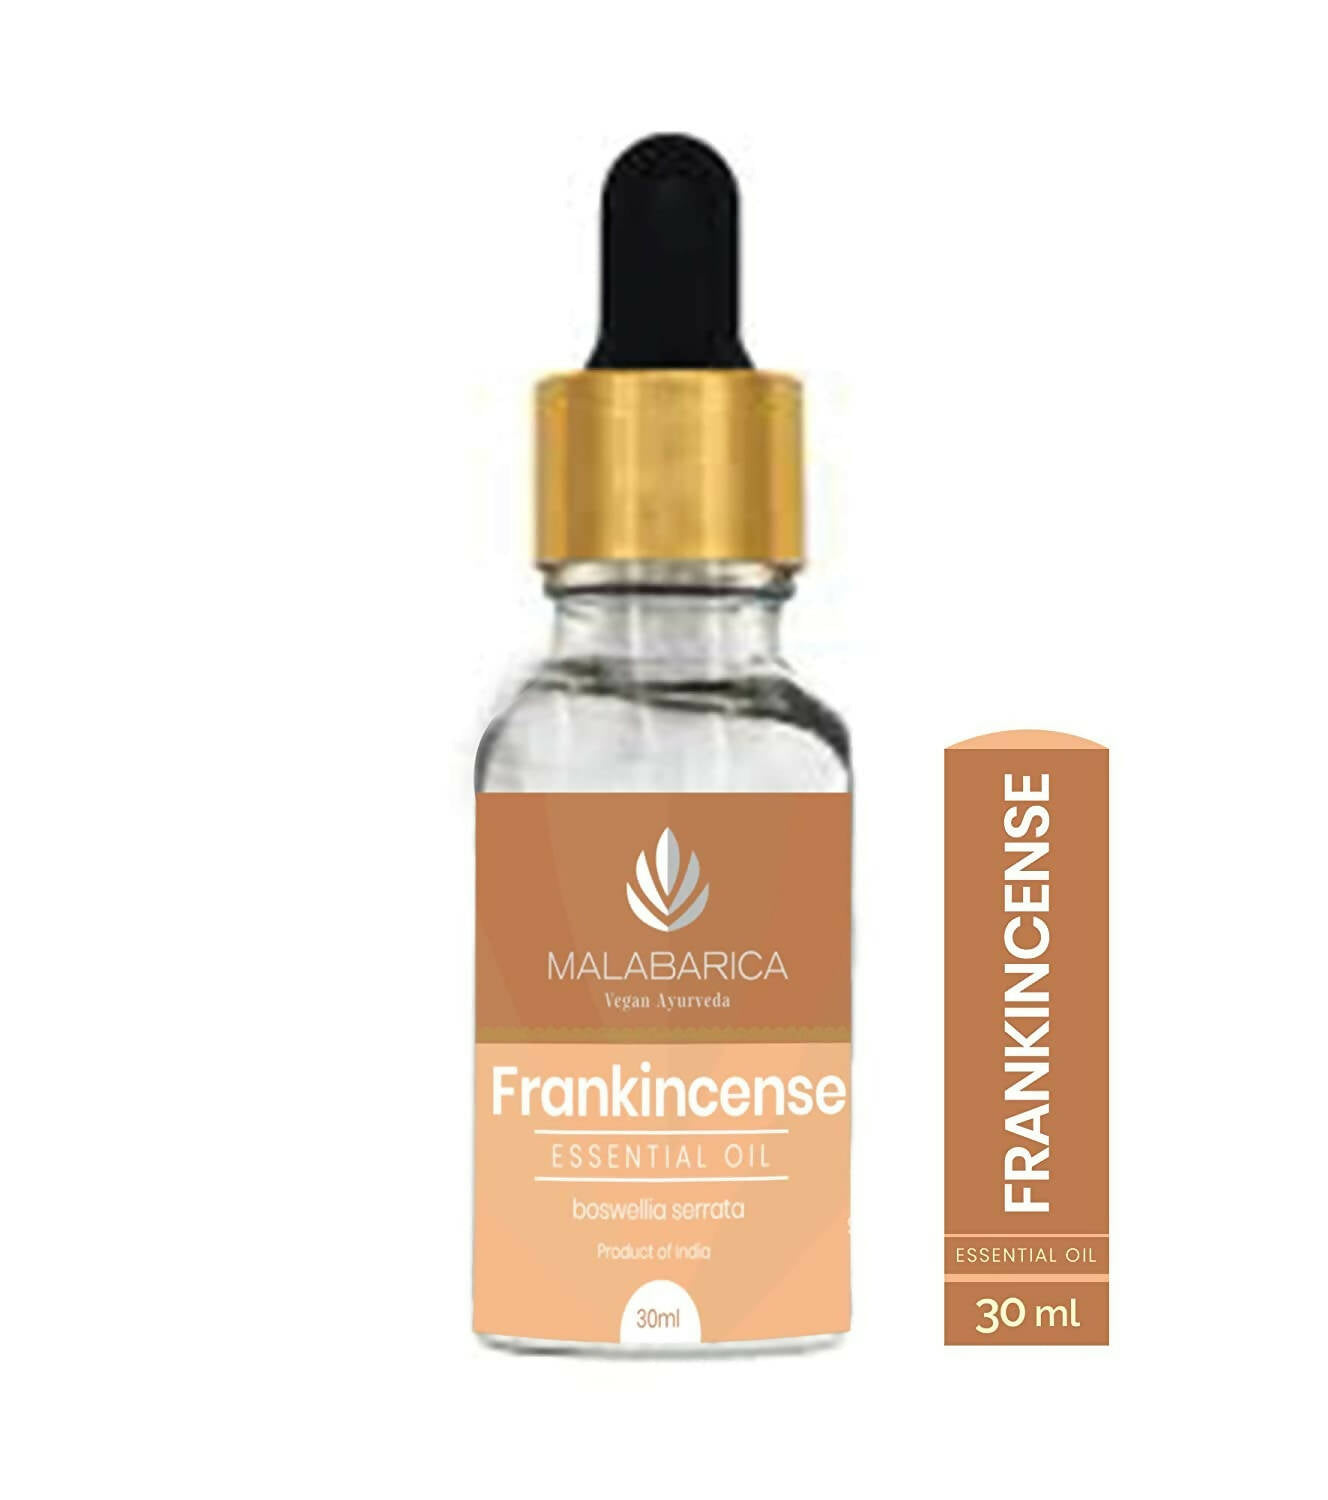 Malabarica Frankincense Essential Oil